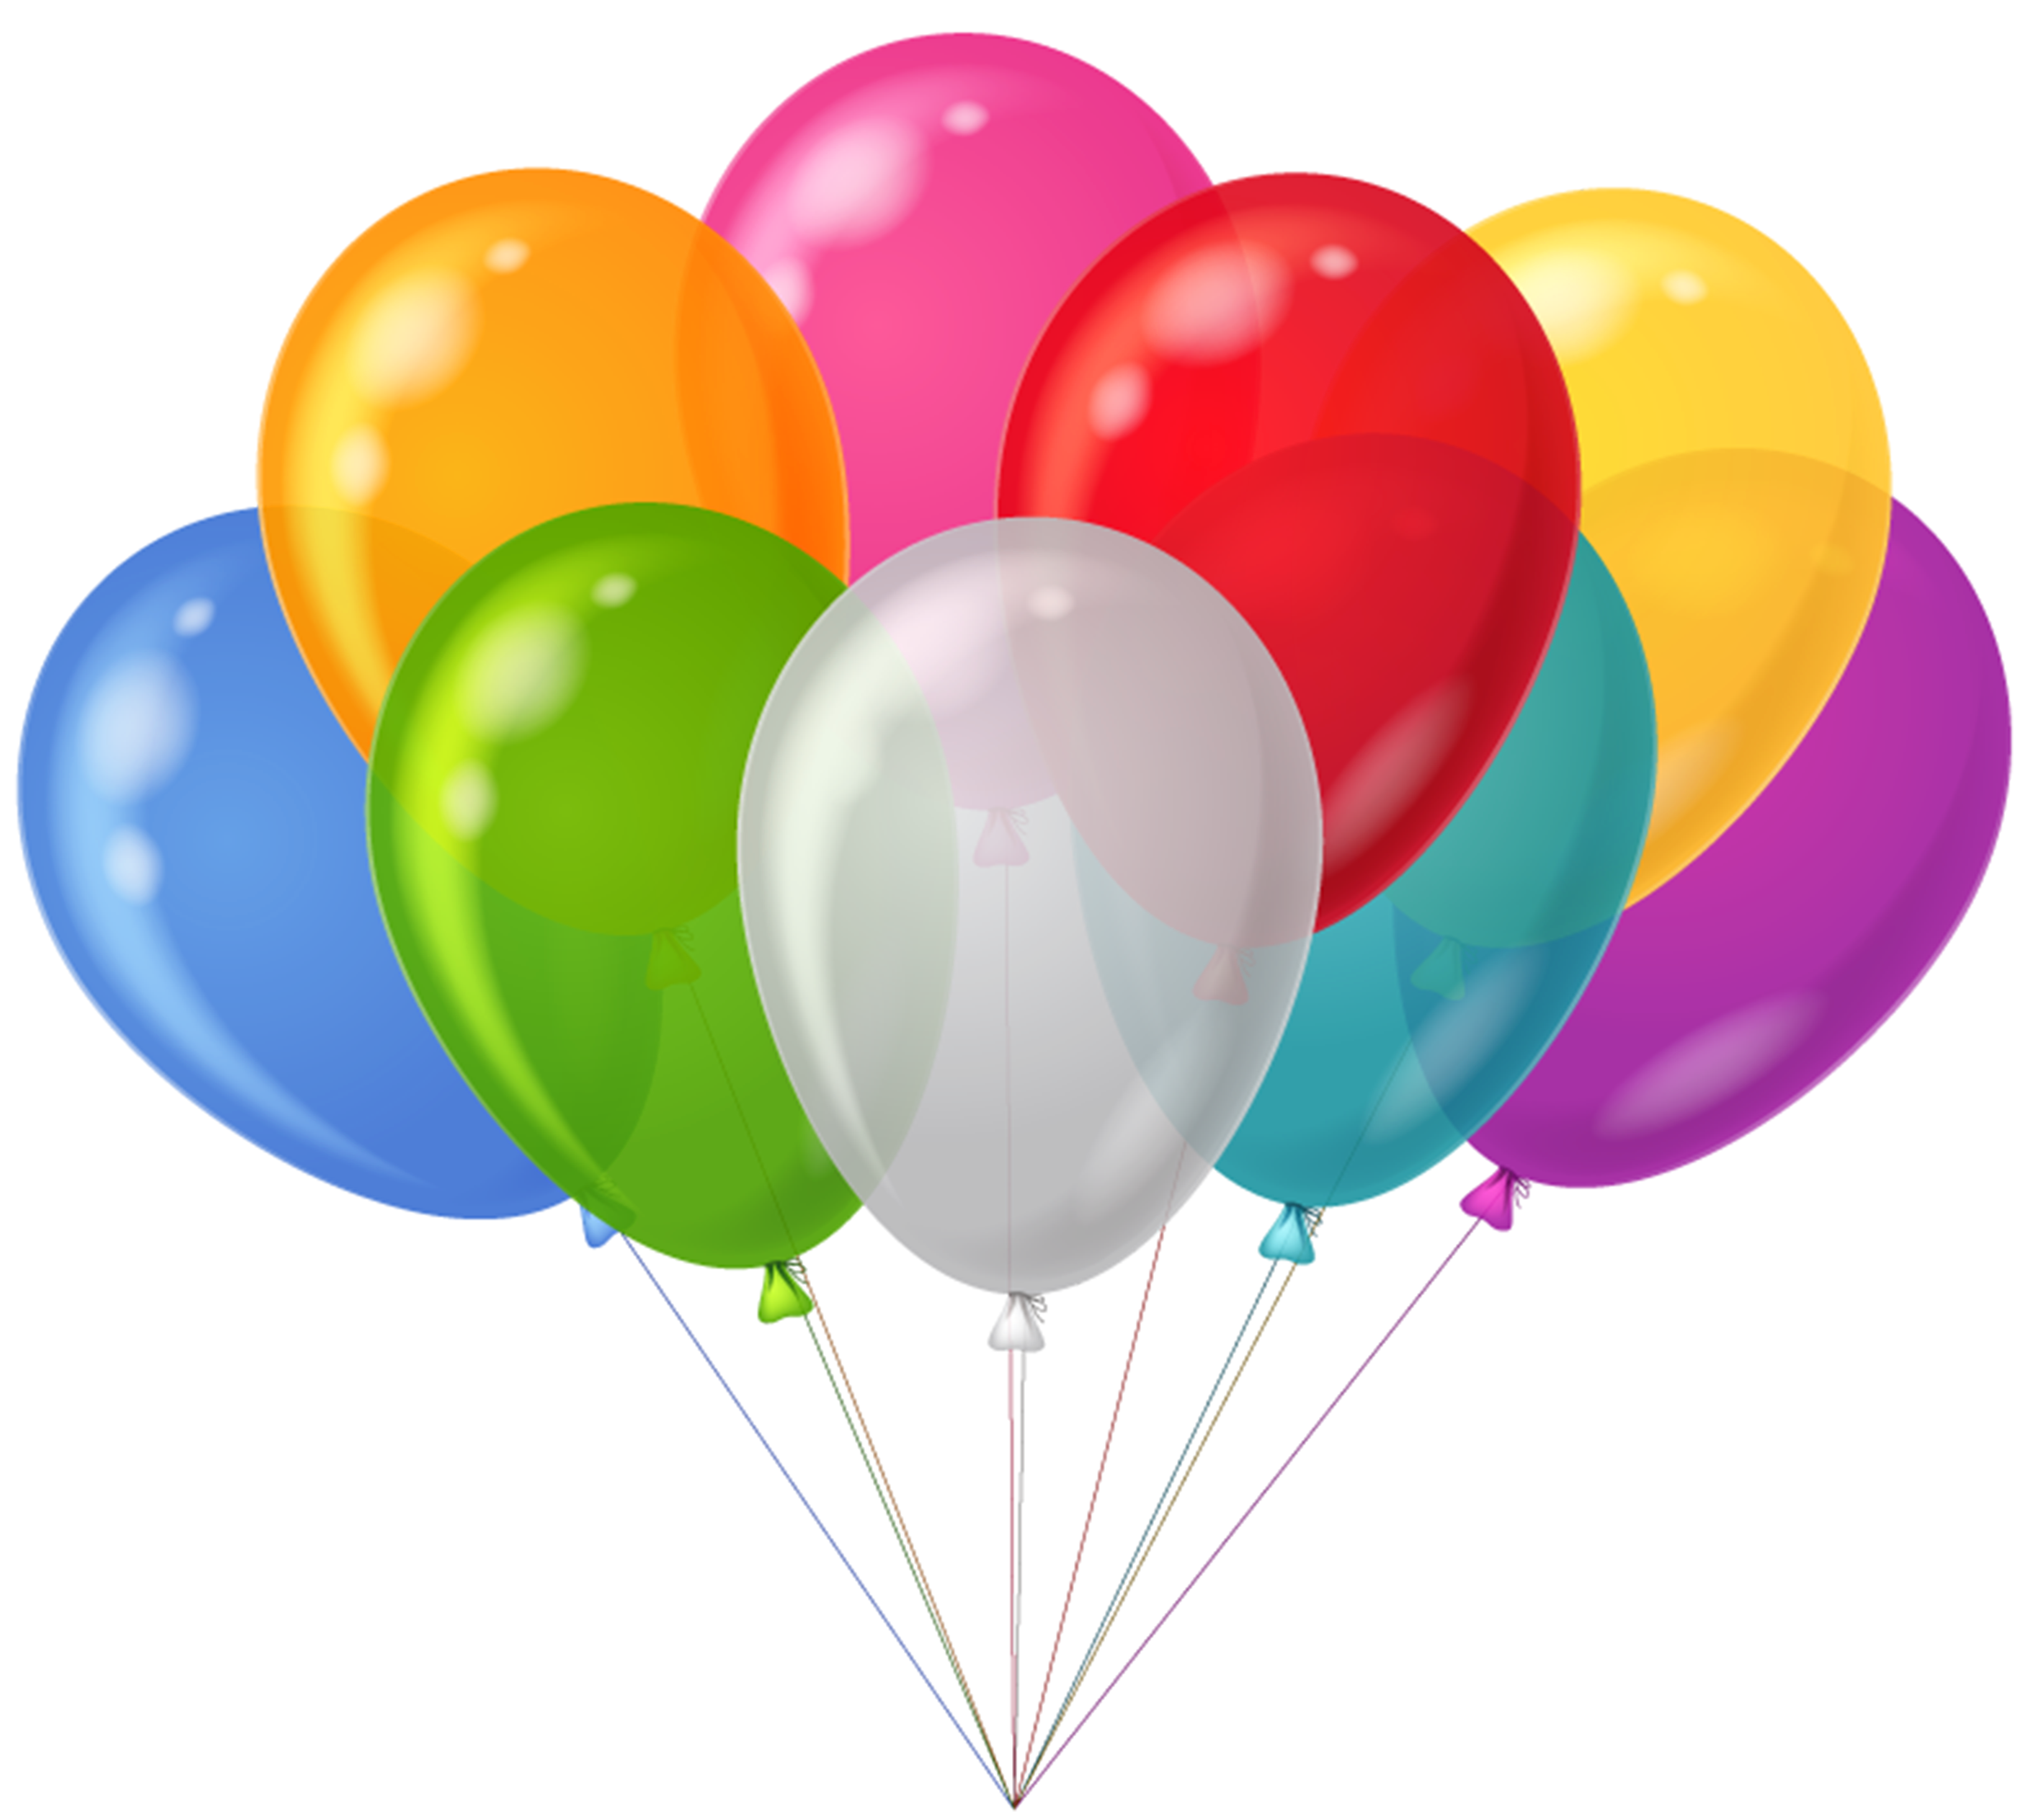 Hot Air Balloon Clip Art Png | Clipart Panda - Free Clipart Images